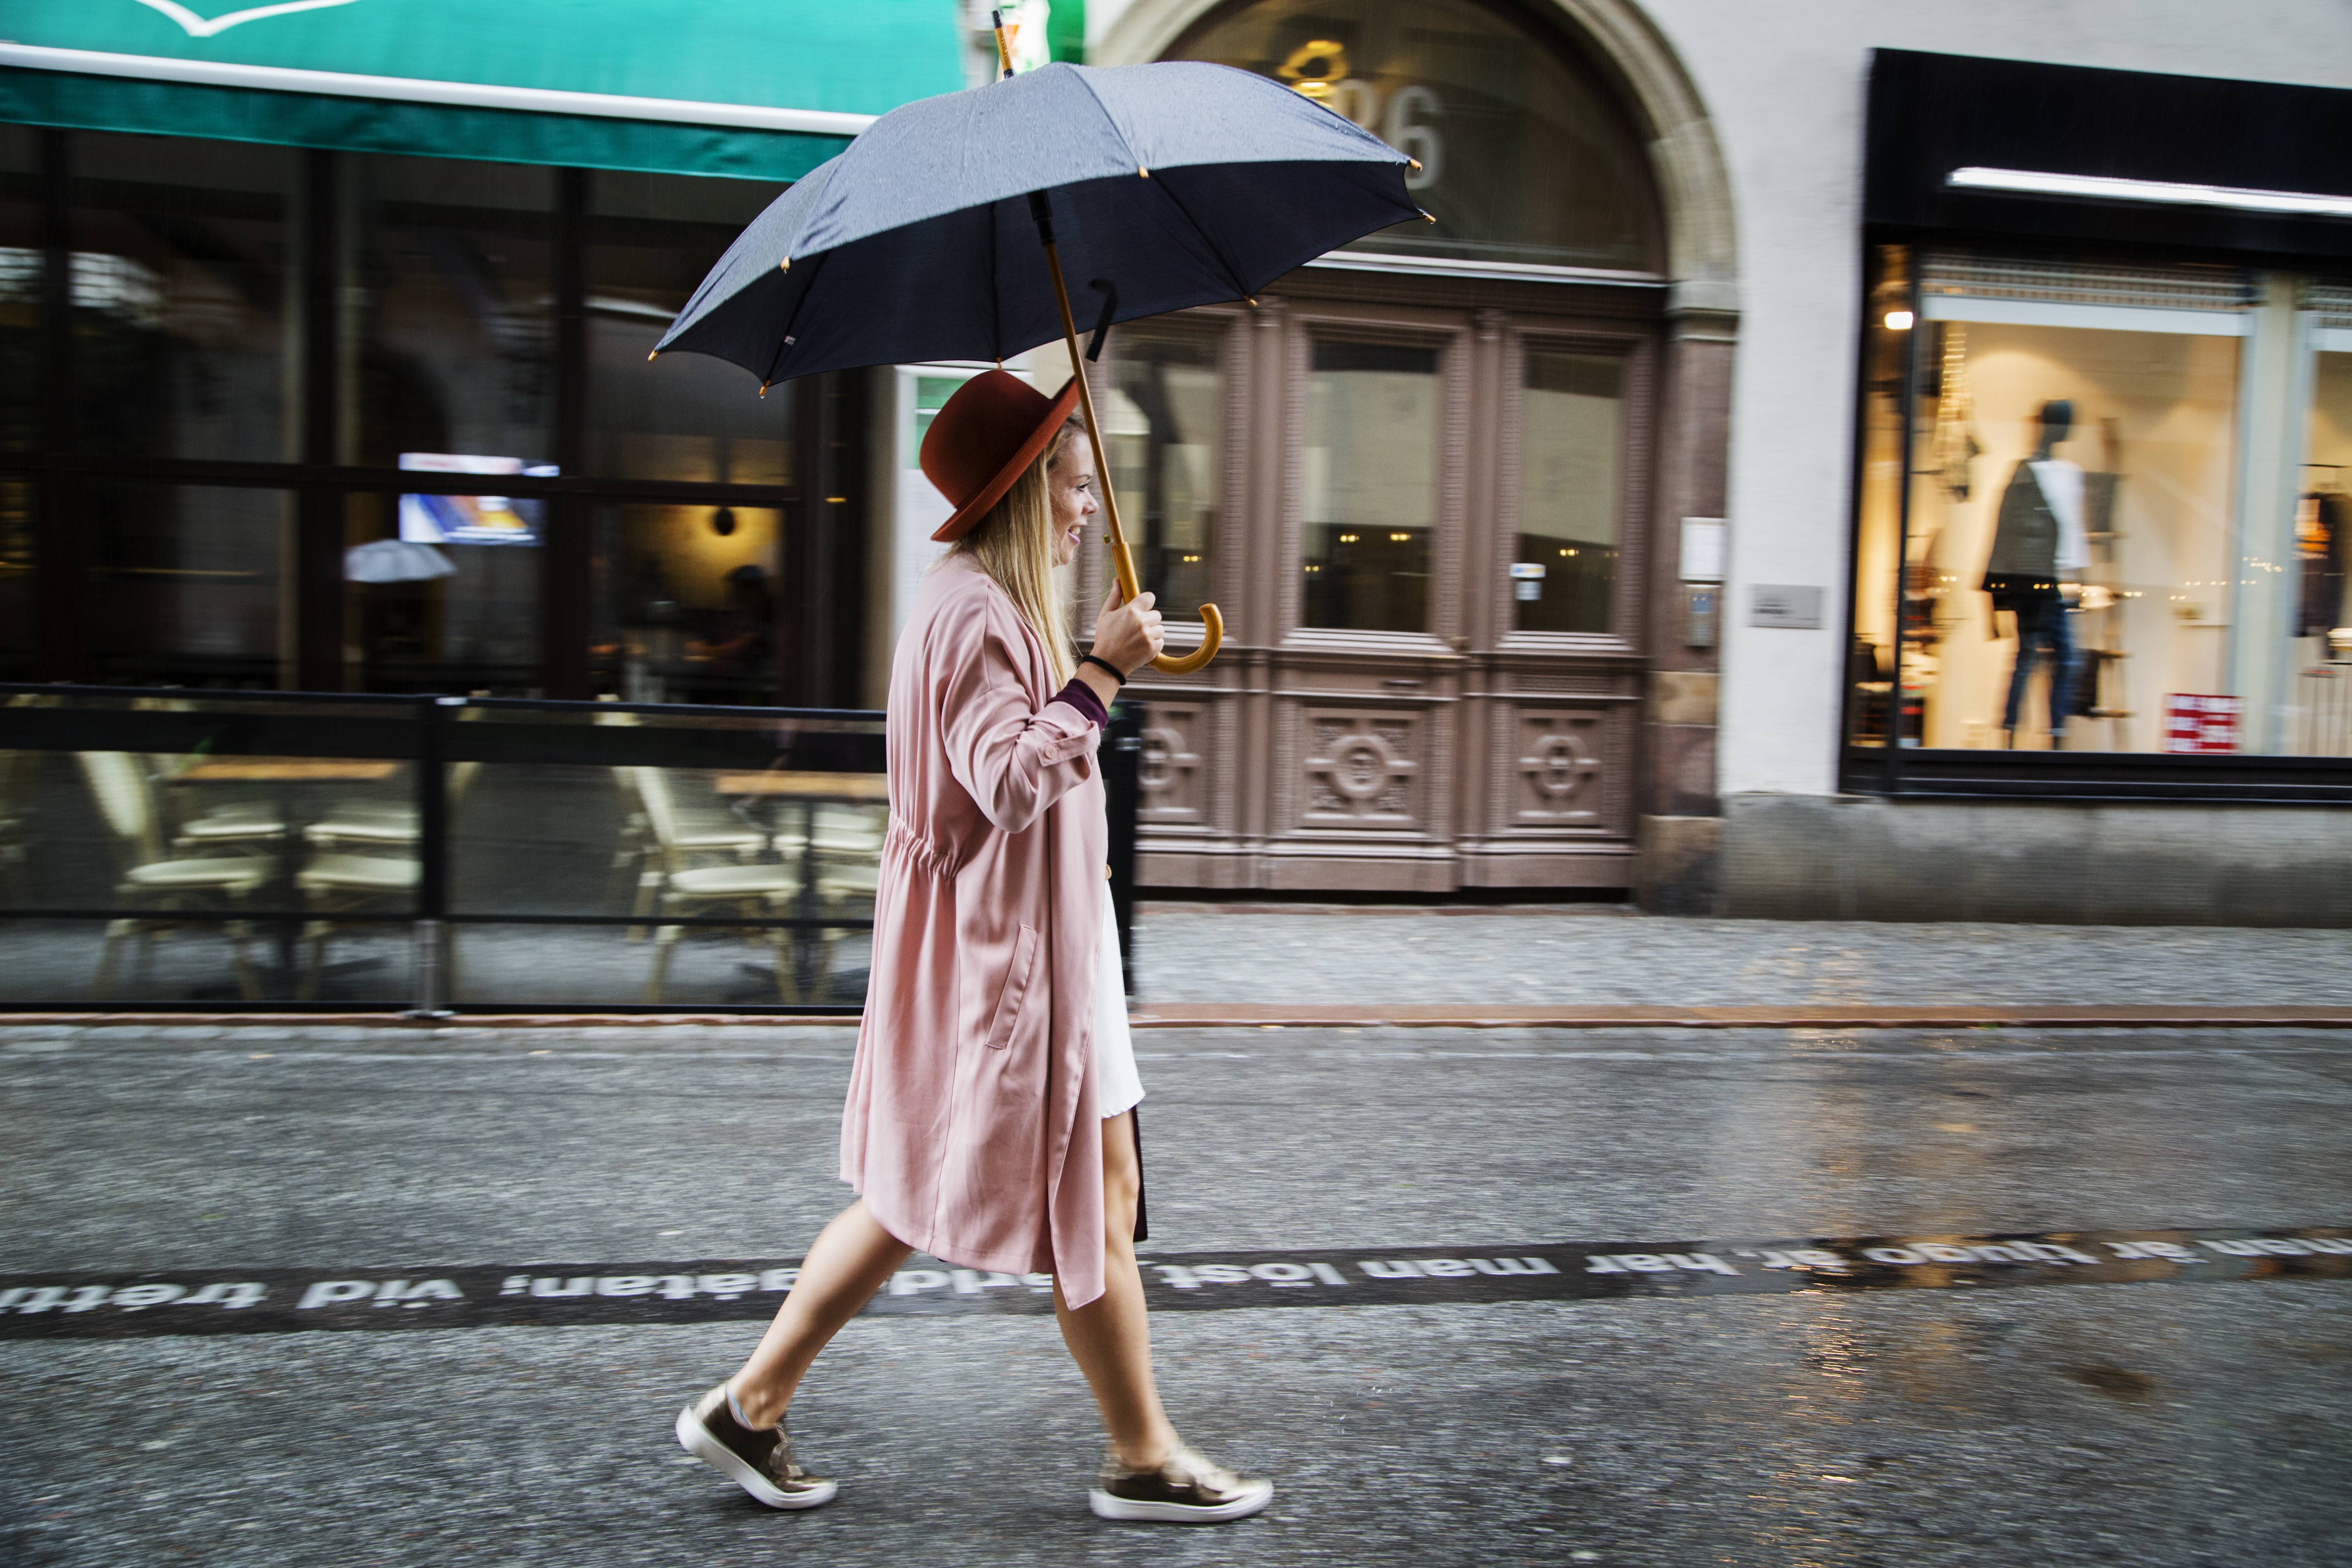 Sofie Lindblom with an umbrella in the rain on Drottninggatan